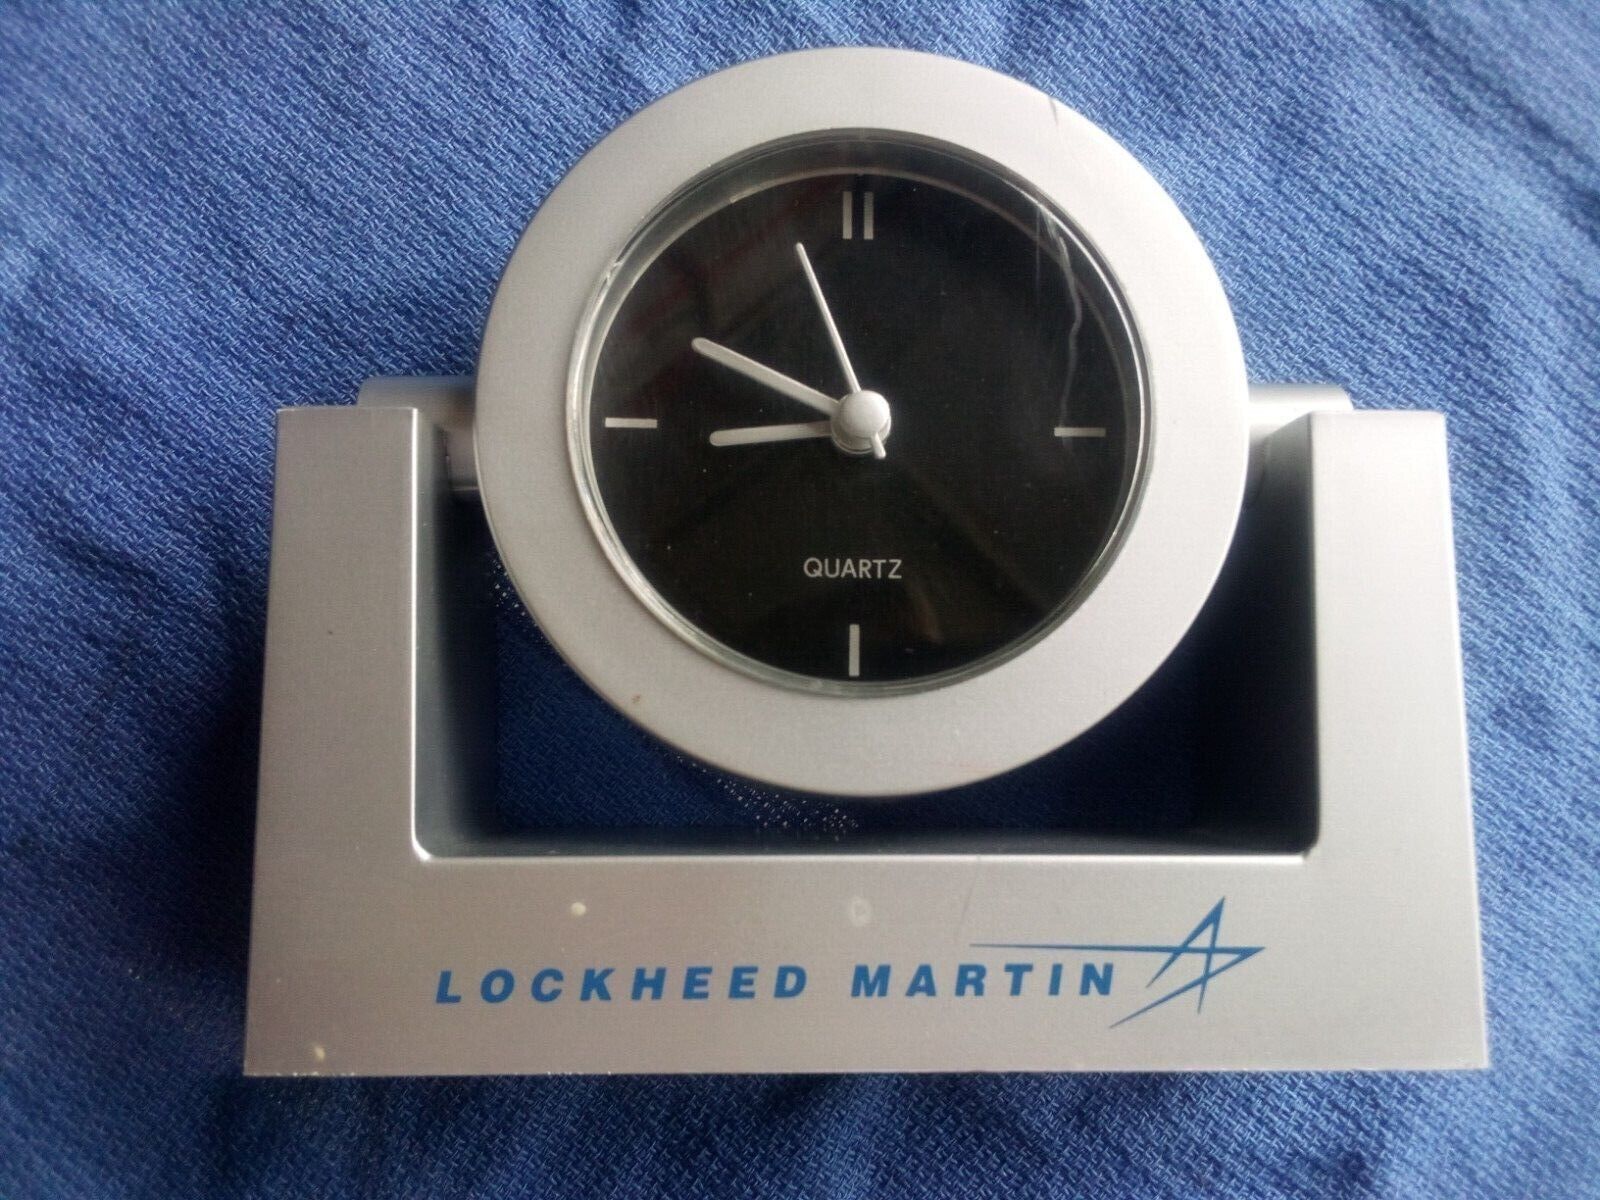 LOCKHEED MARTIN CLOCK AND MORE